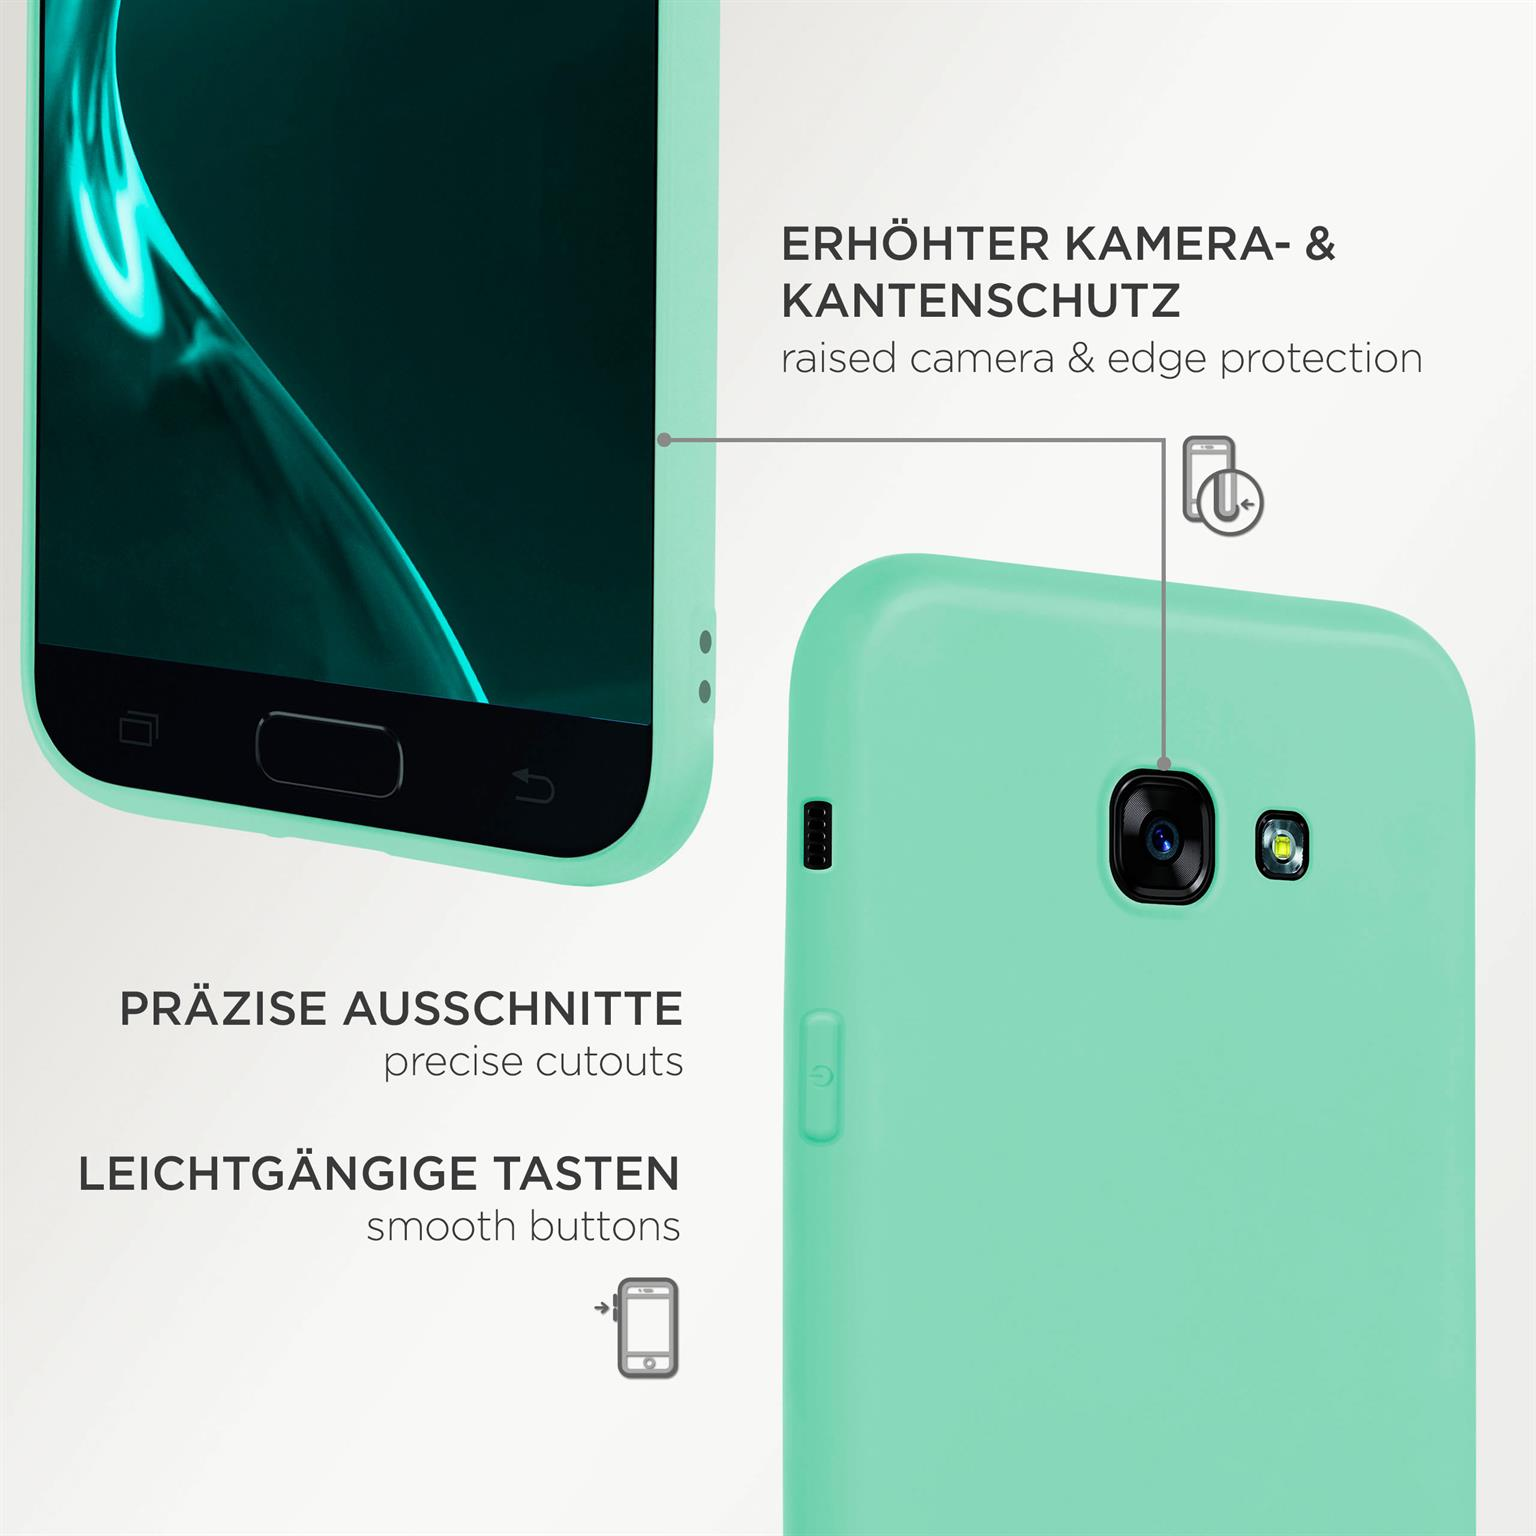 ONEFLOW SlimShield Backcover, Case, Türkis Pro Galaxy (2017), Samsung, A5